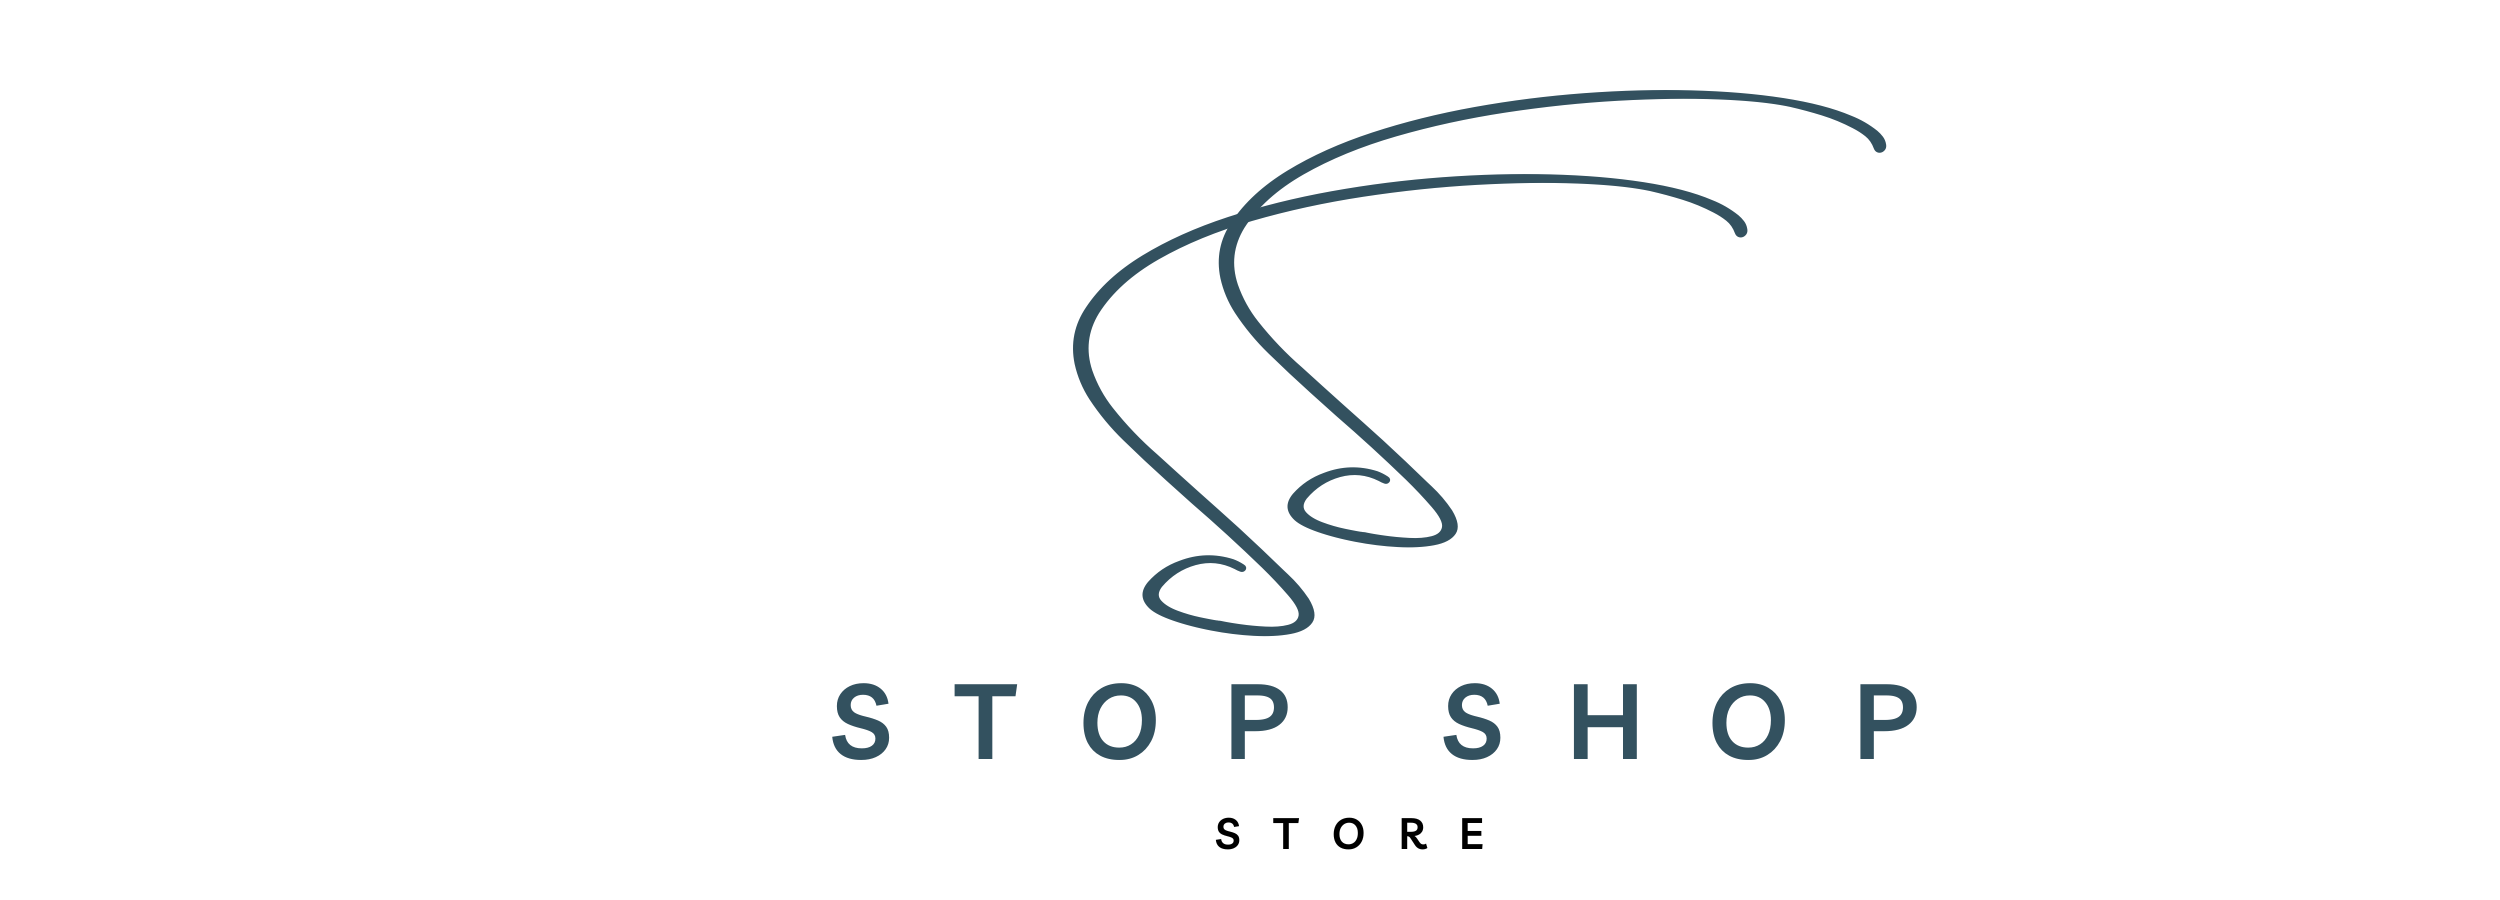 The Stop Shop